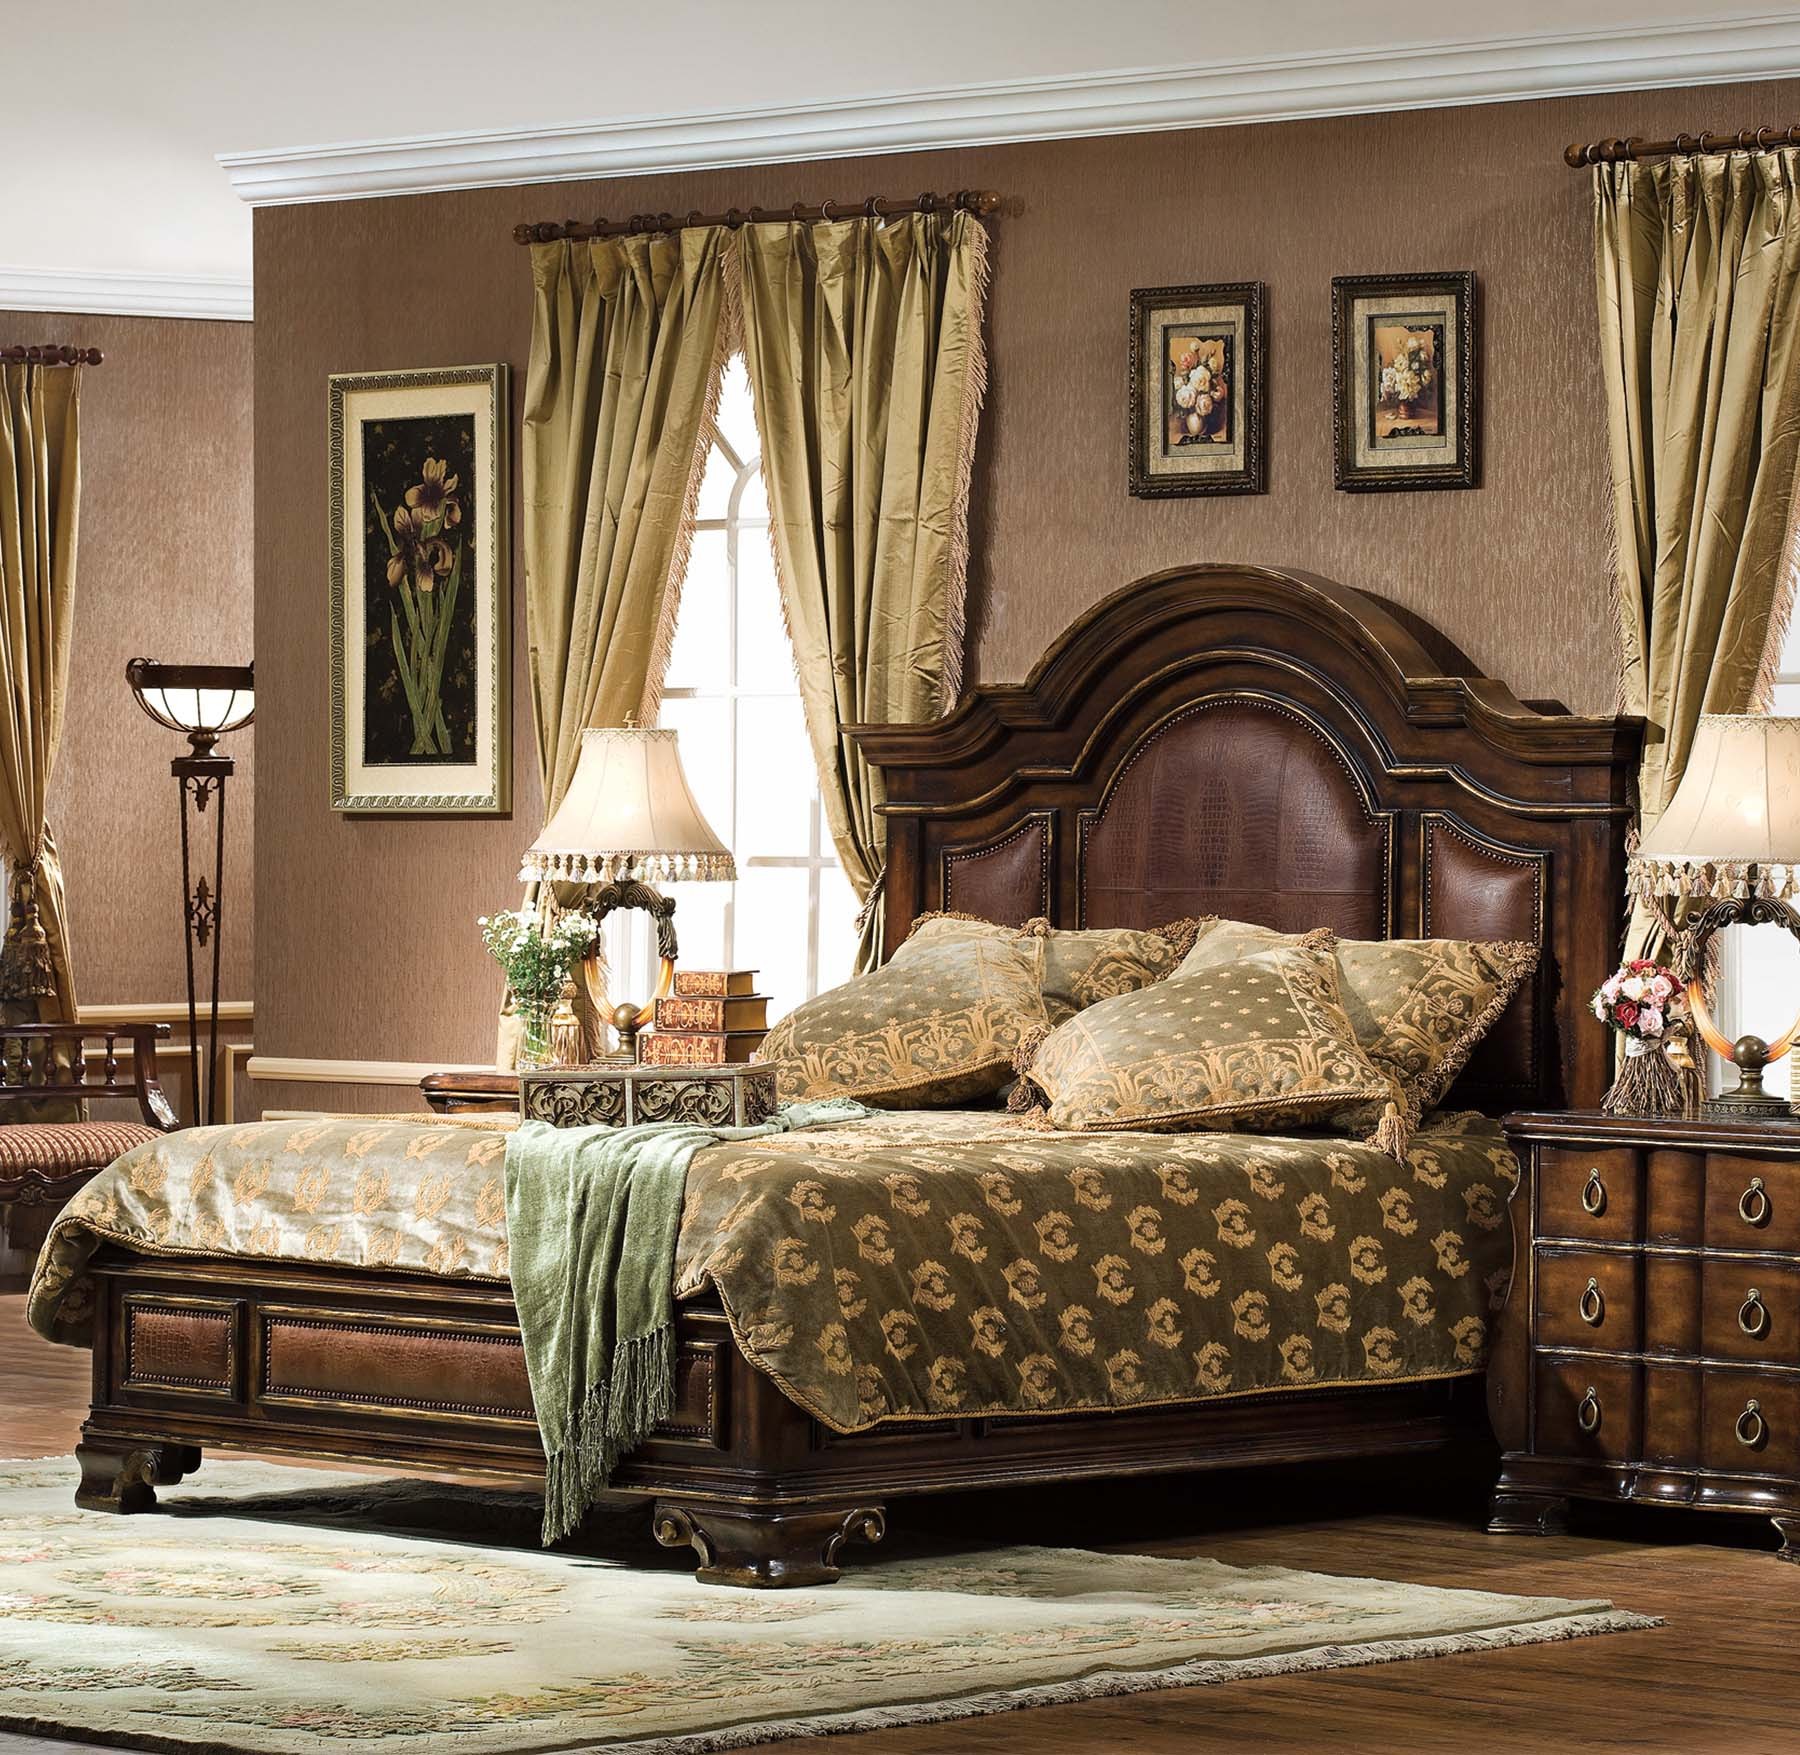 Georgia Bed shown in Antique Chestnut finish